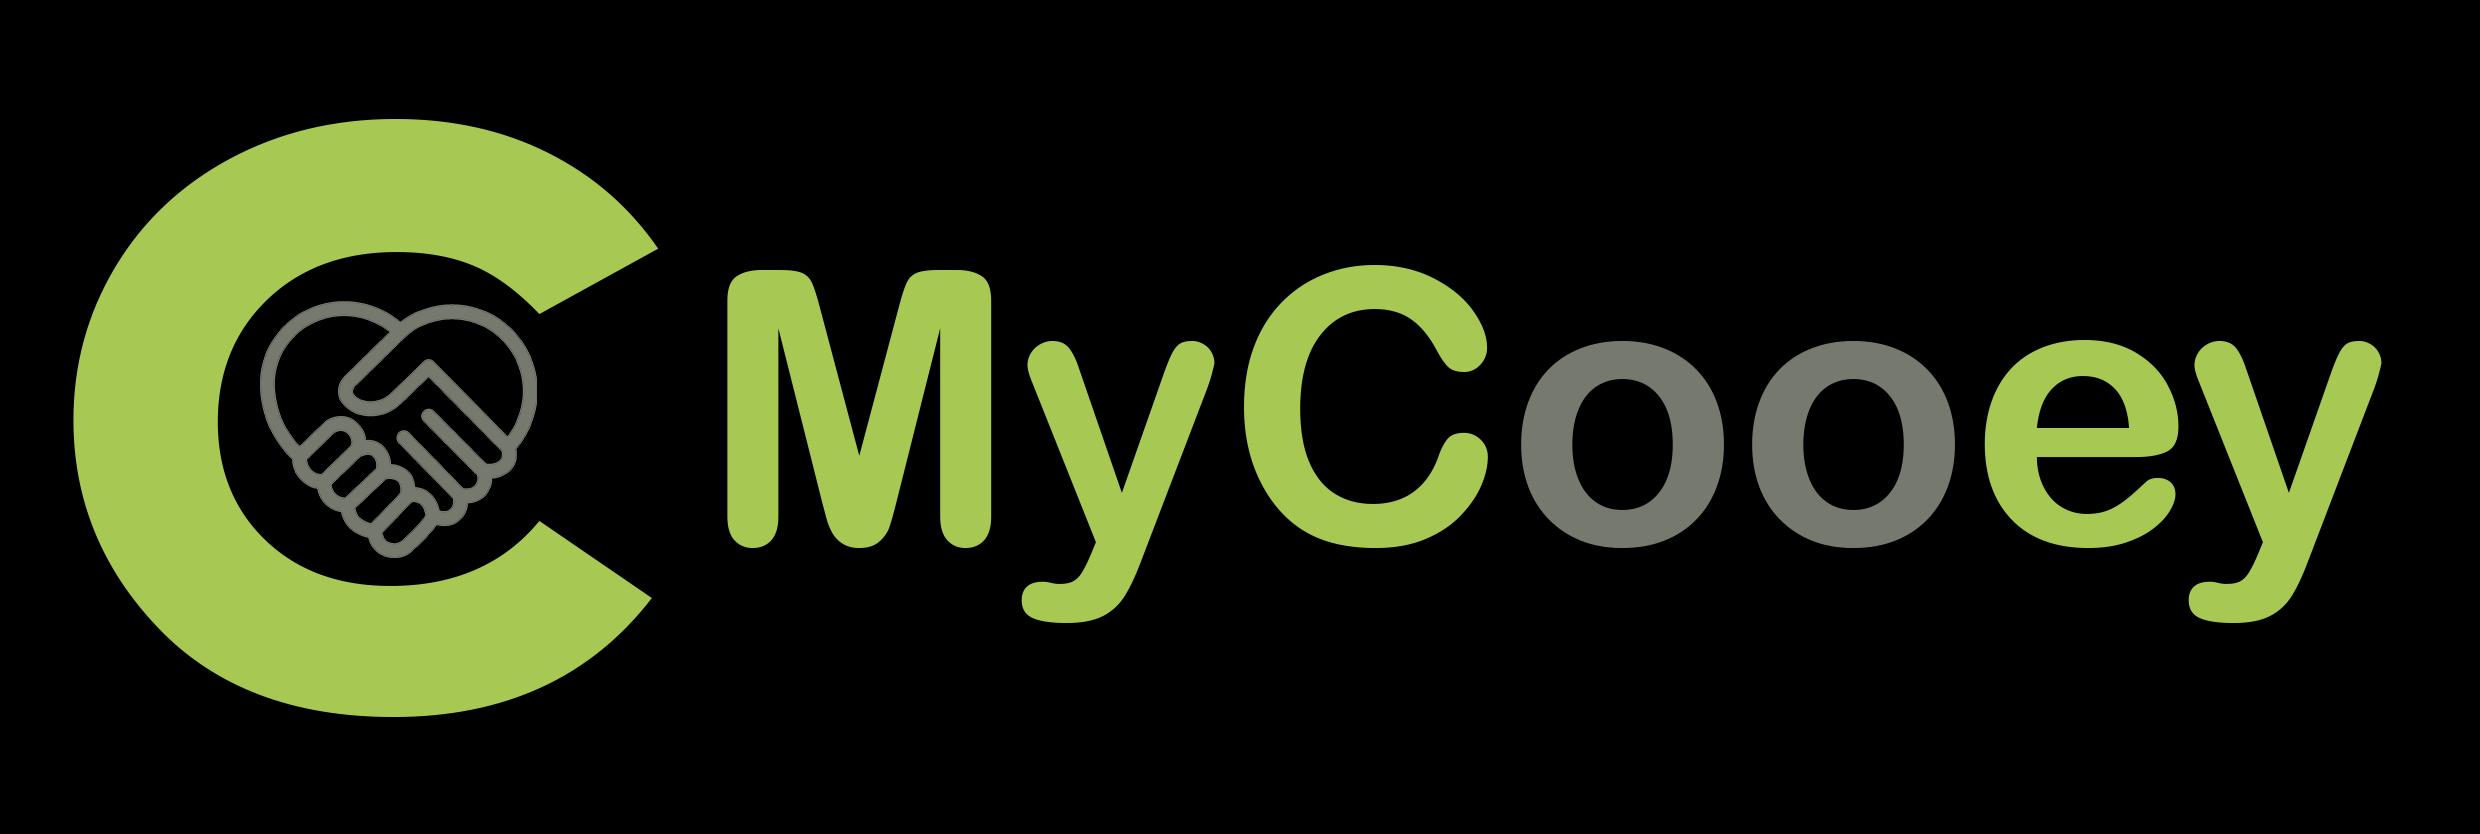 MyCooey_logo